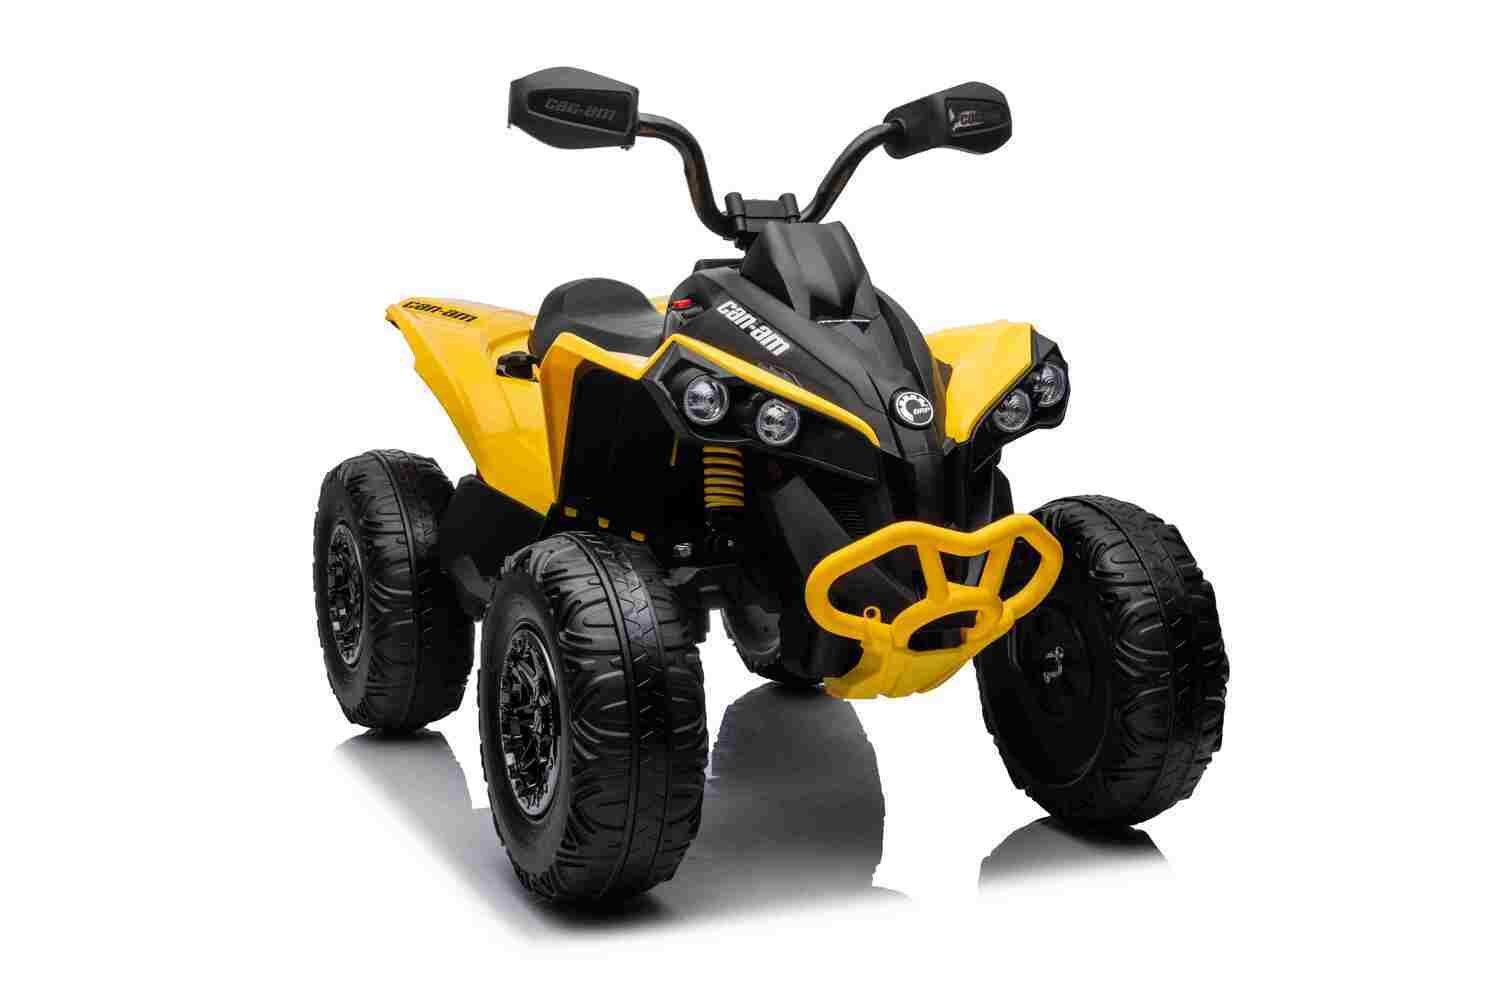 BoGi Elektro-Kinderquad Can-am ATV Quad Kinderfahrzeug Elektrofahrzeug Elektroquad 4x4 Antrieb Gelb